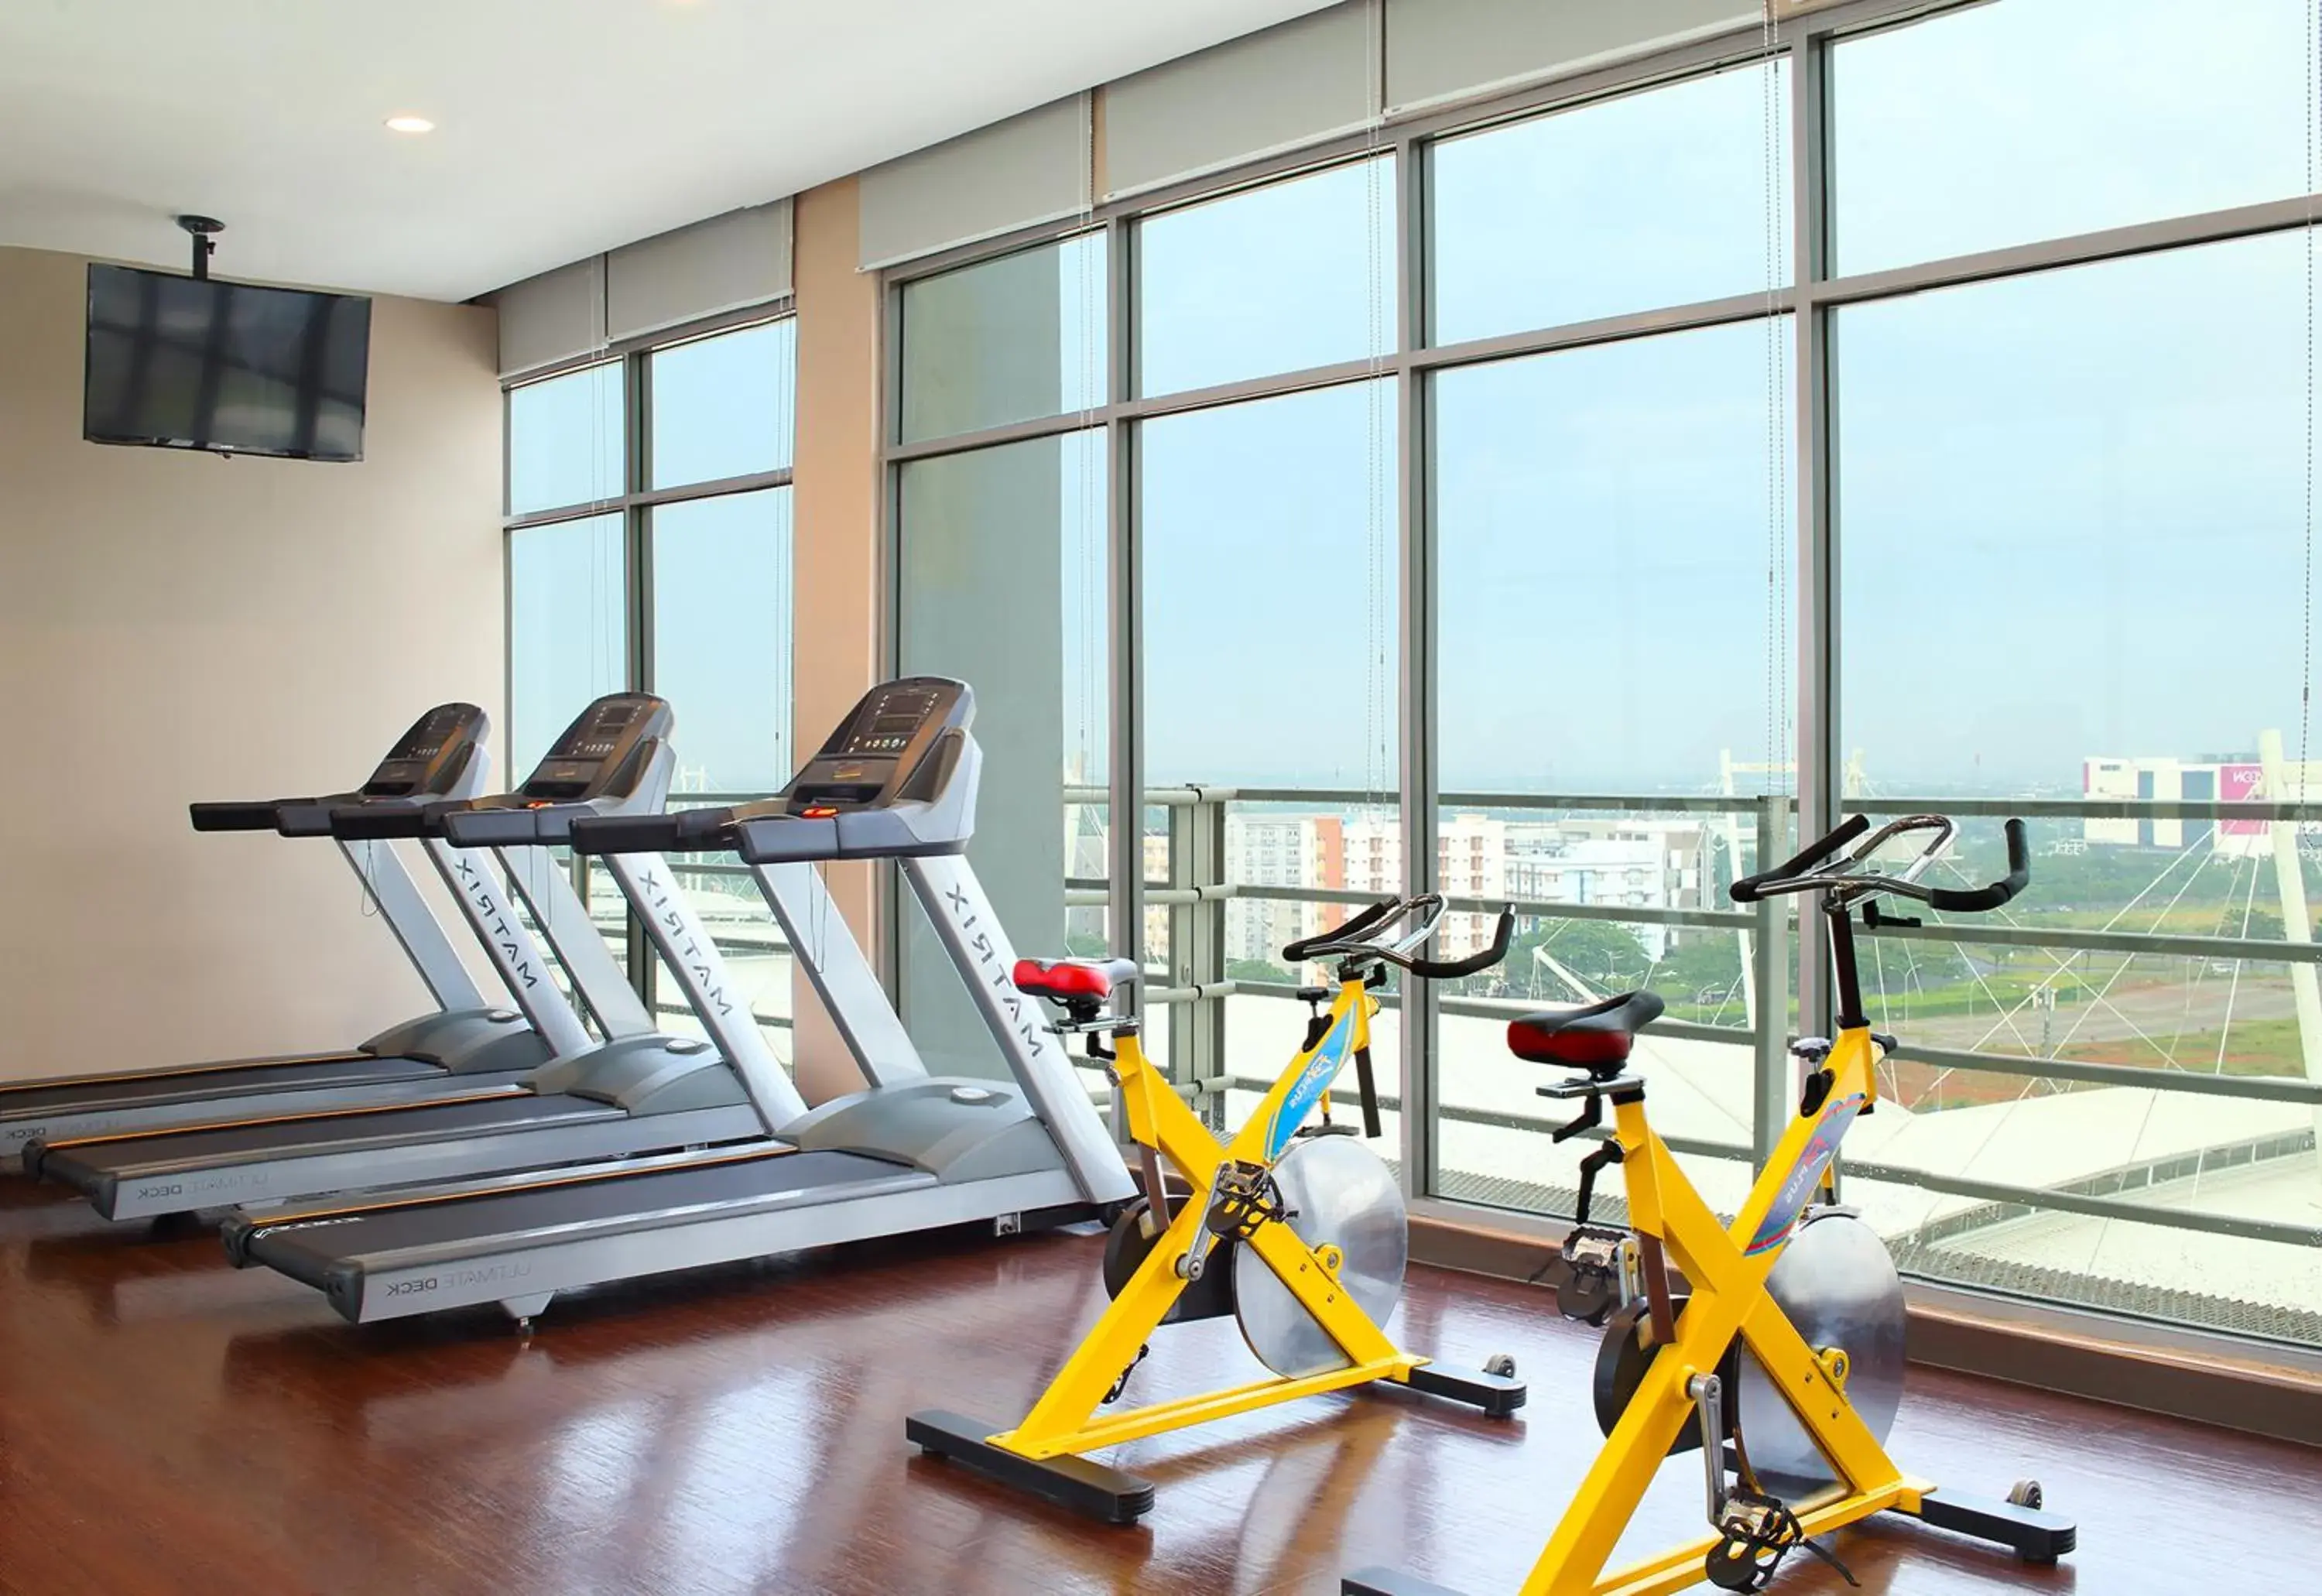 Fitness centre/facilities, Fitness Center/Facilities in Hotel Santika Premiere ICE - BSD City